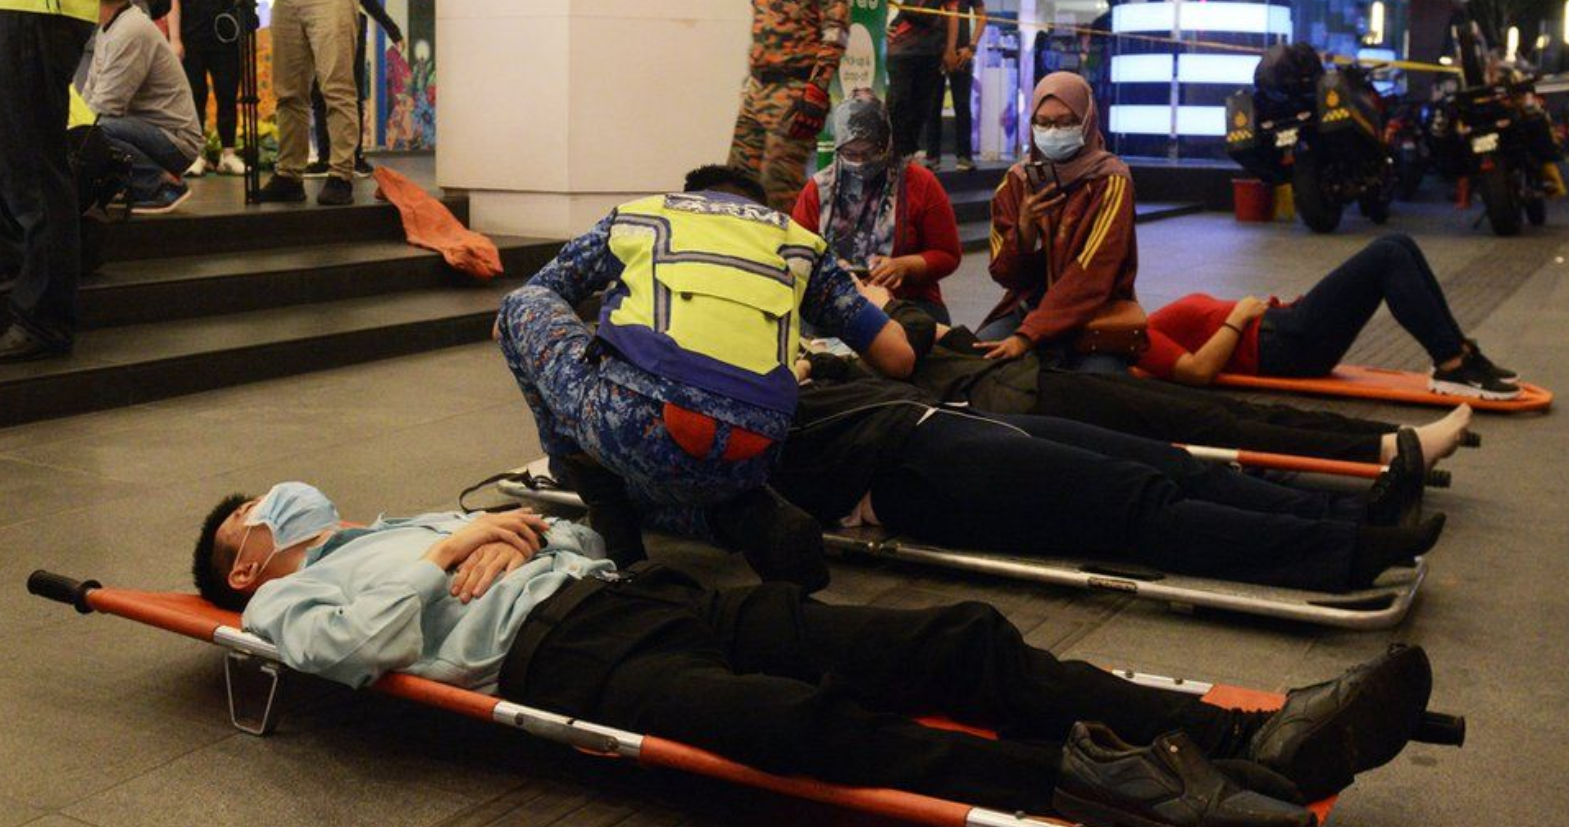 Injured passengers beign treated after Metro crash in Kuala Lumpur